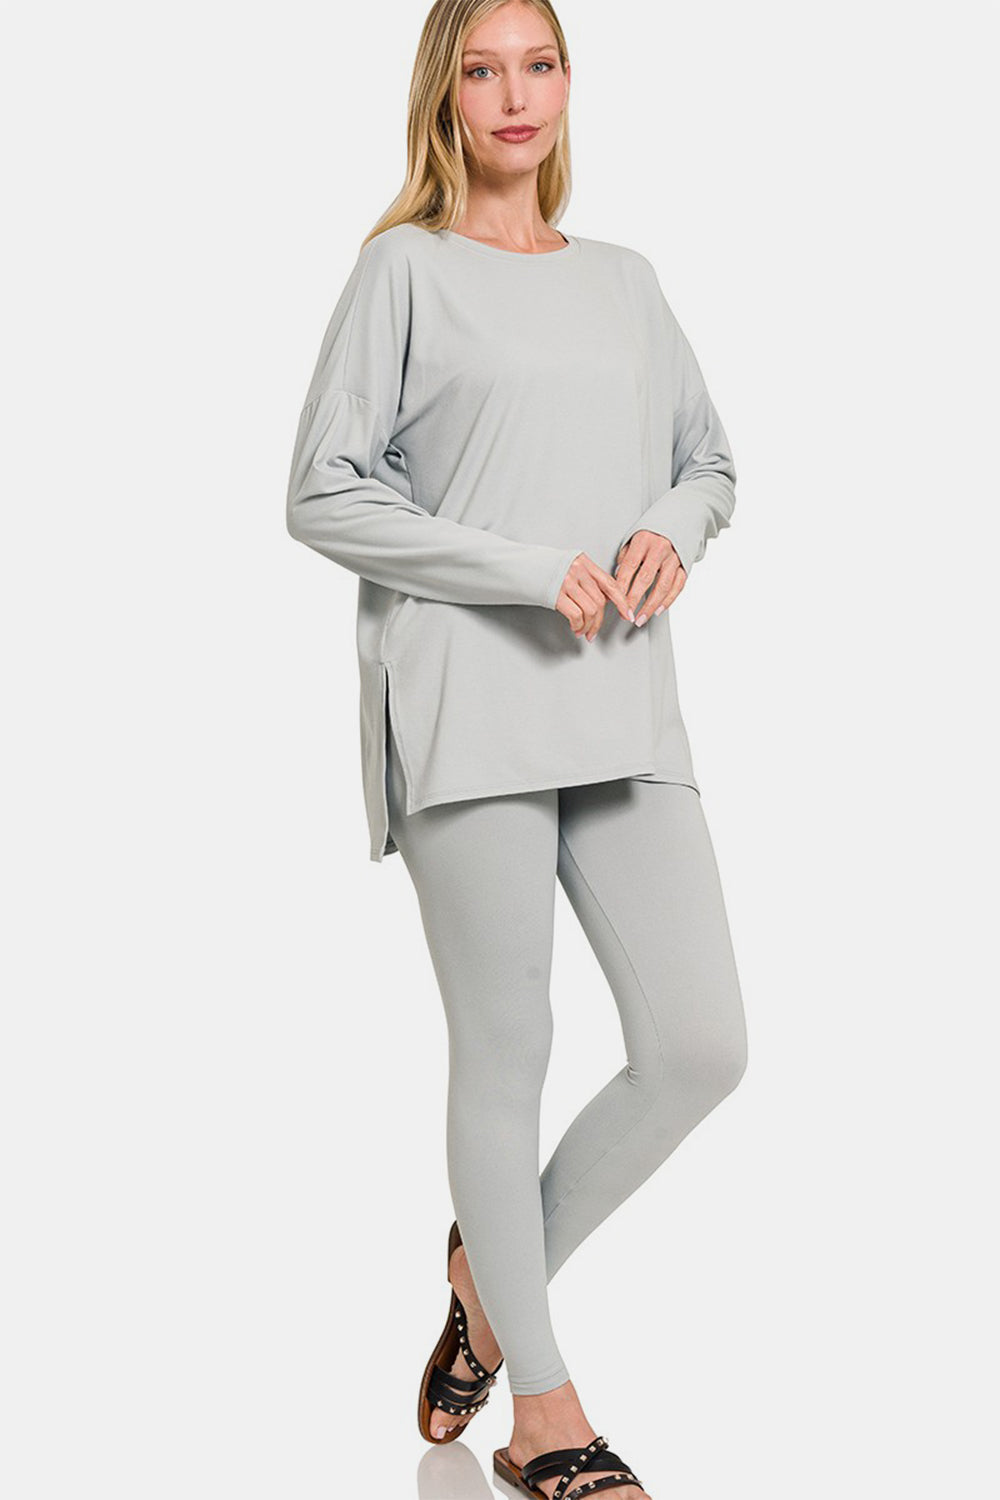 Zenana Light Grey Brushed Microfiber Long Sleeve Top and Leggings Lounge Set Lt Grey Trendsi